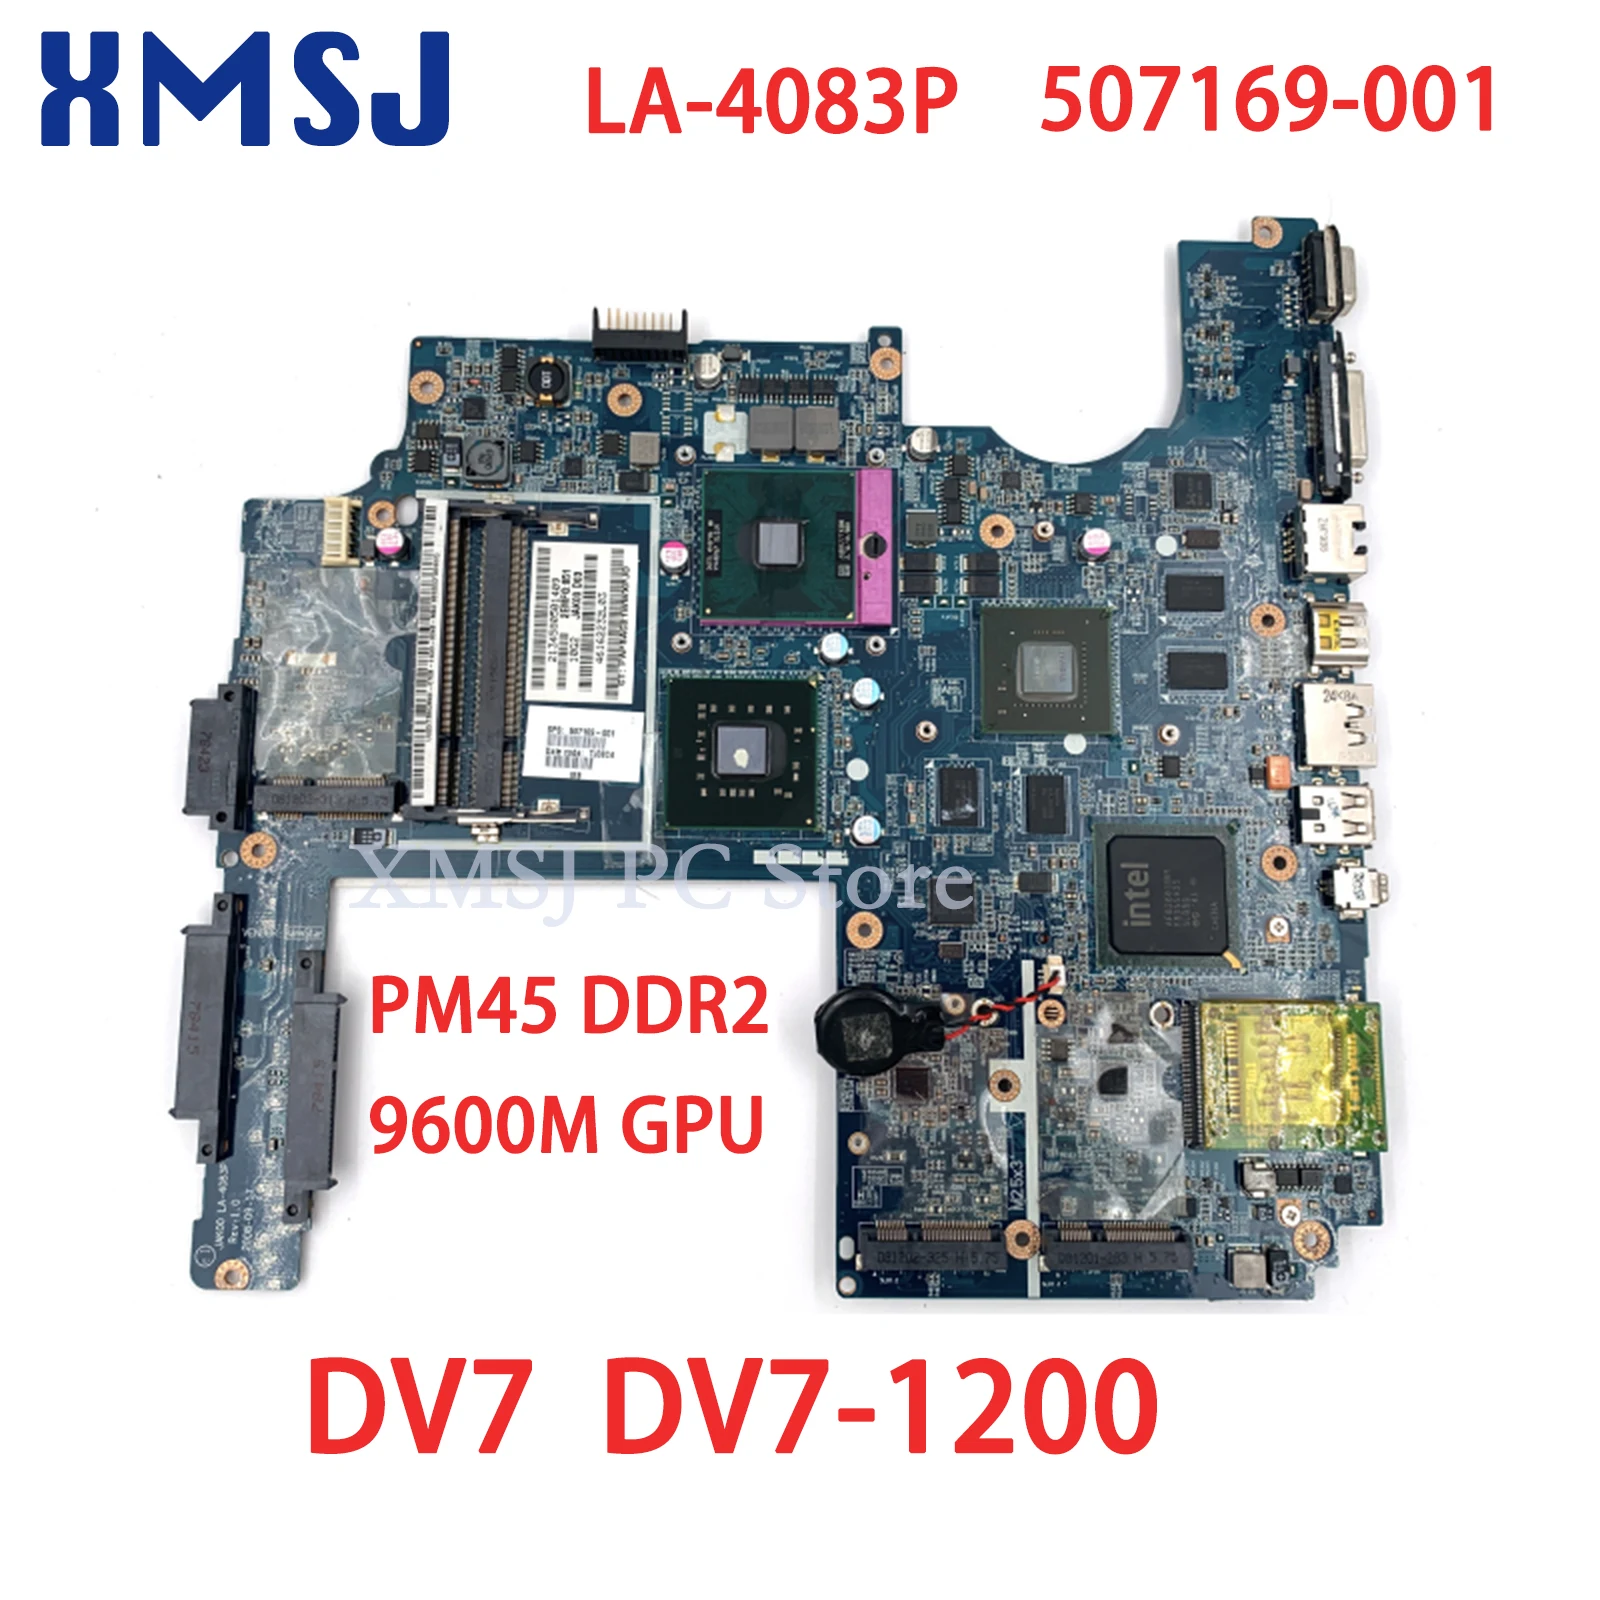 

XMSJ JAK00 LA-4083P 507169-001 Main board For HP Pavilion DV7 DV7-1200 Laptop Motherboard PM45 DDR2 9600M GPU Free CPU